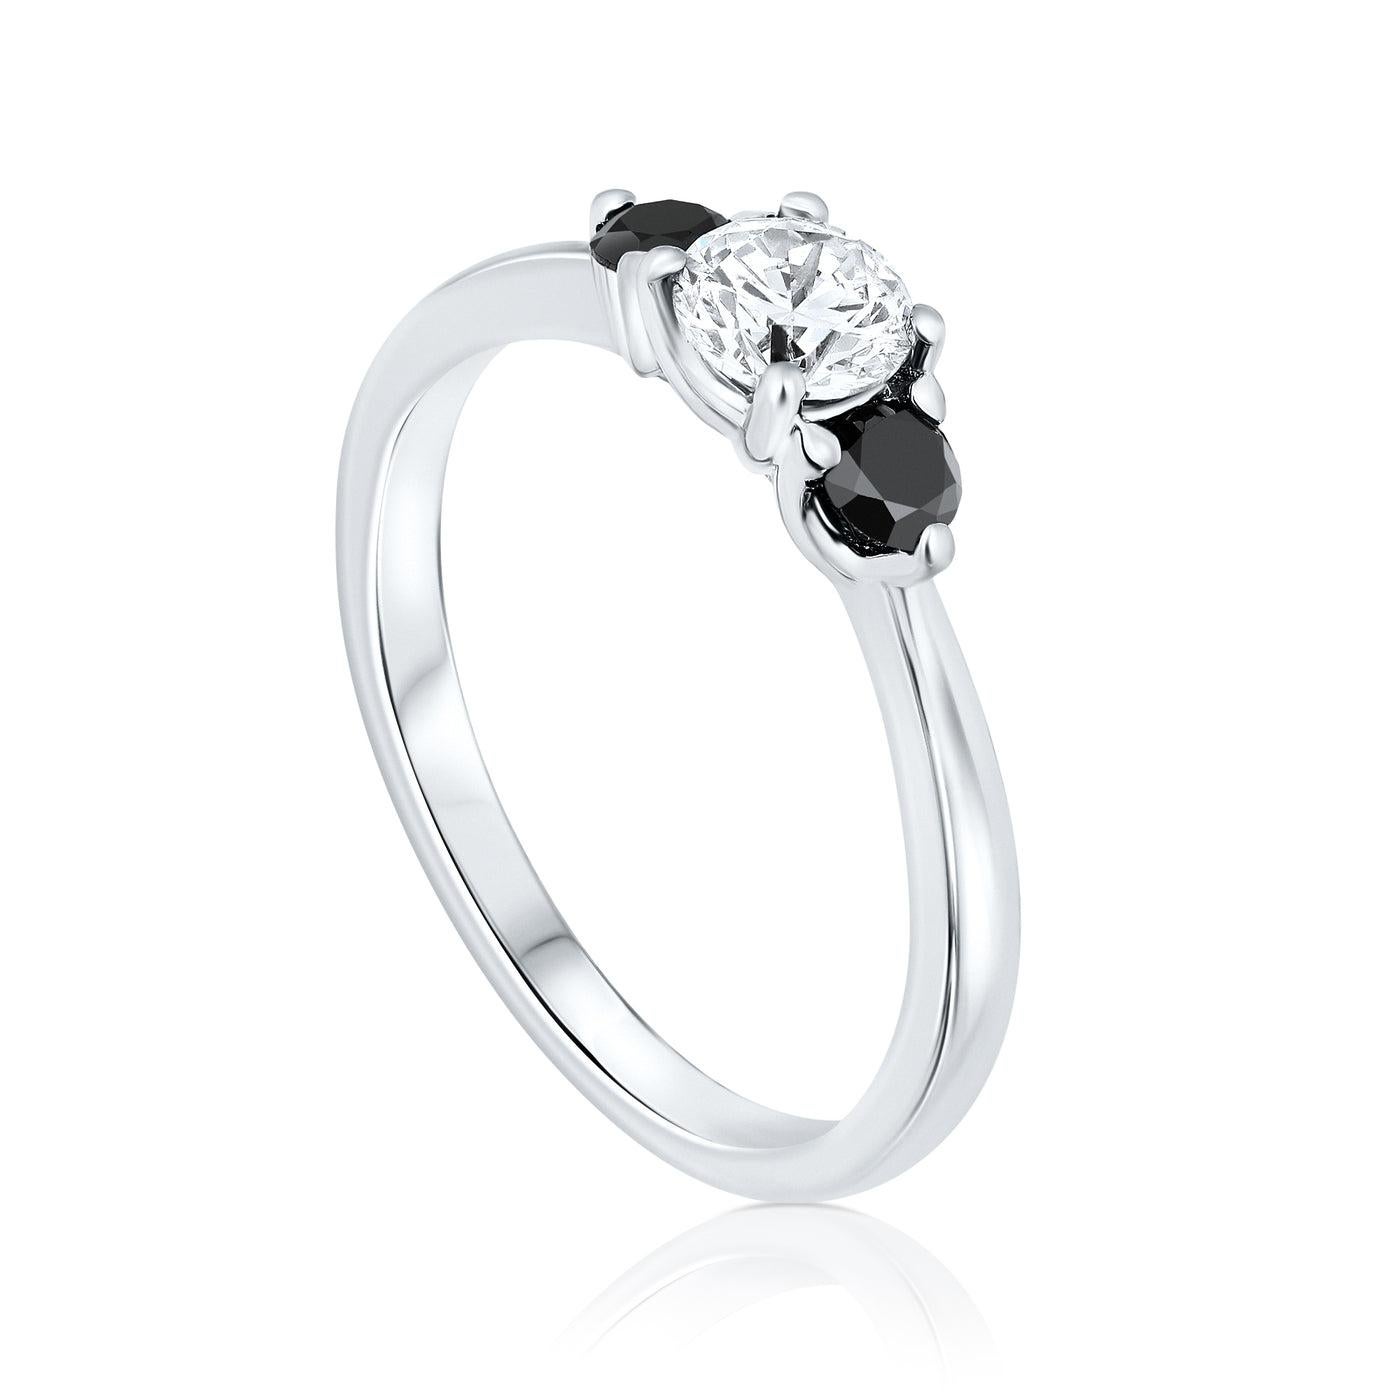 For Sale:  0.40 Carat White and Black Diamond Ring in 14 Karat White Gold, Shlomit Rogel 2